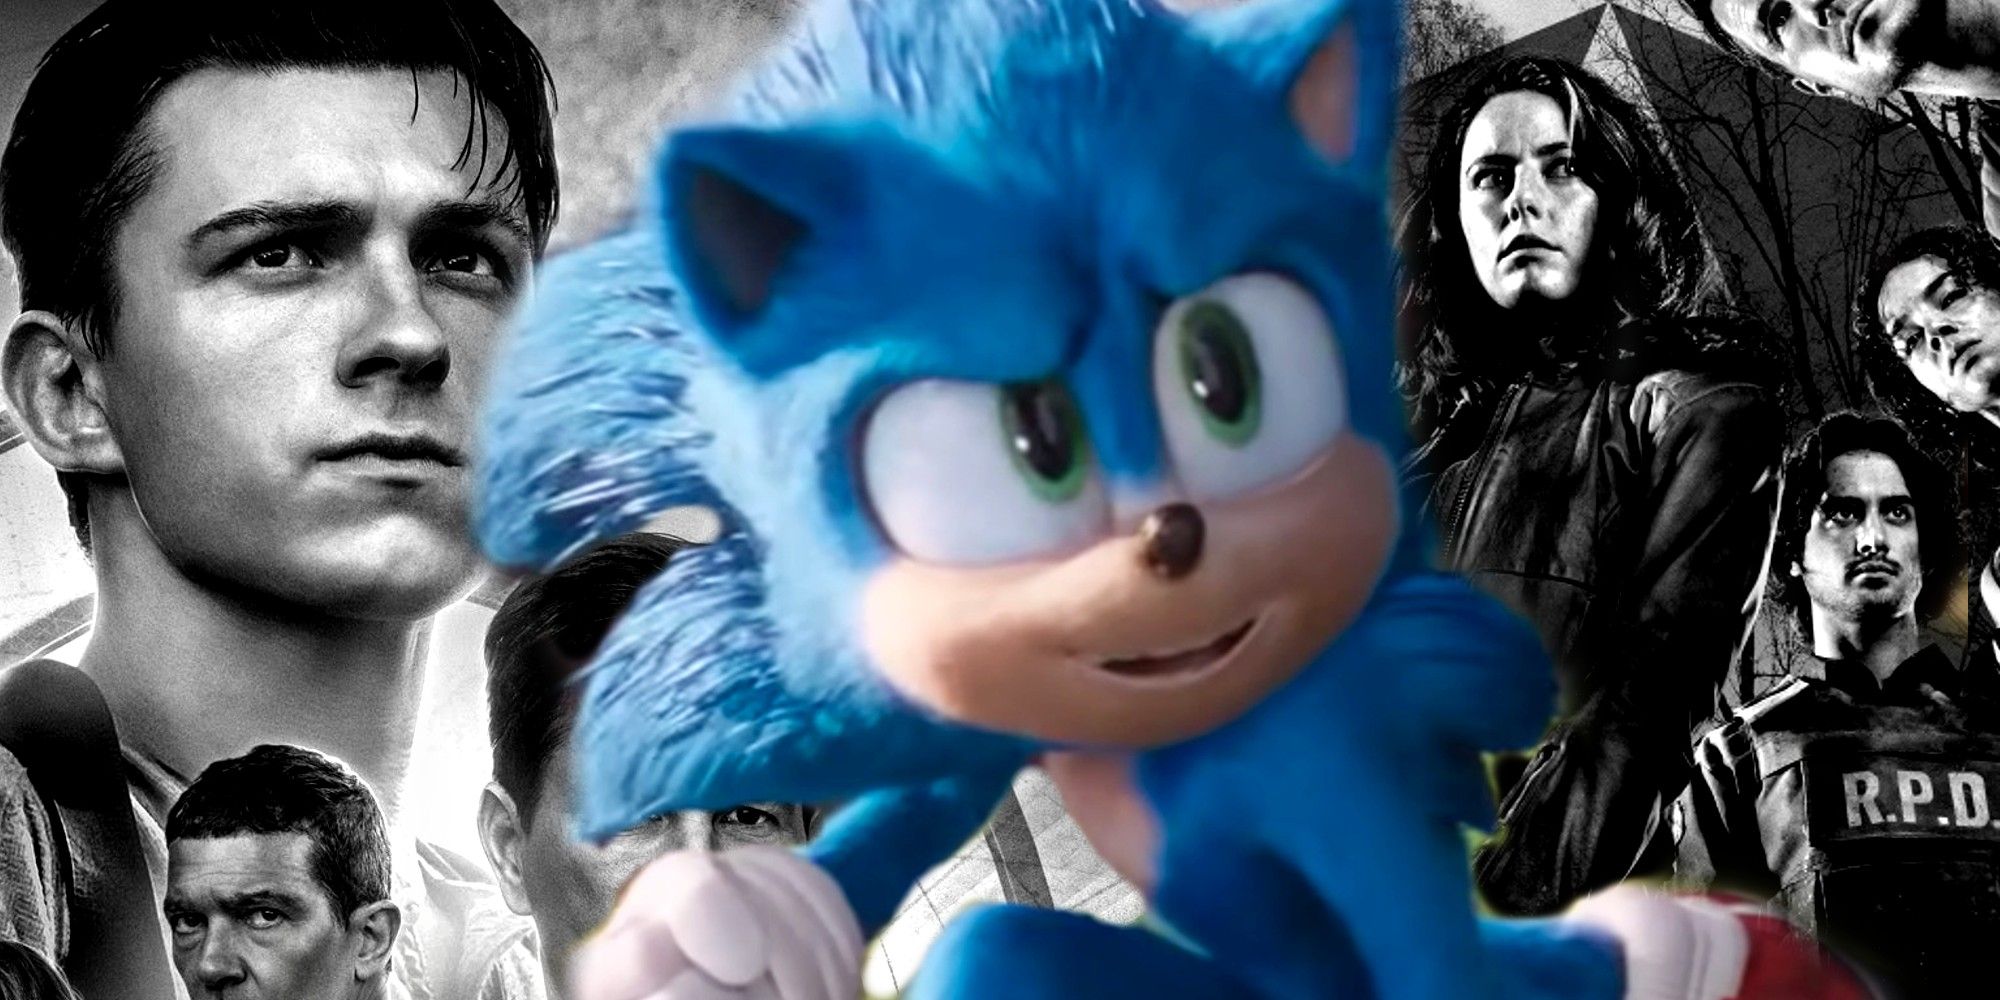 Sonic the Hedgehog 2 Ben Schwartz as Sonic the Hedgehog Becomes Highest Grossing Video Game Film